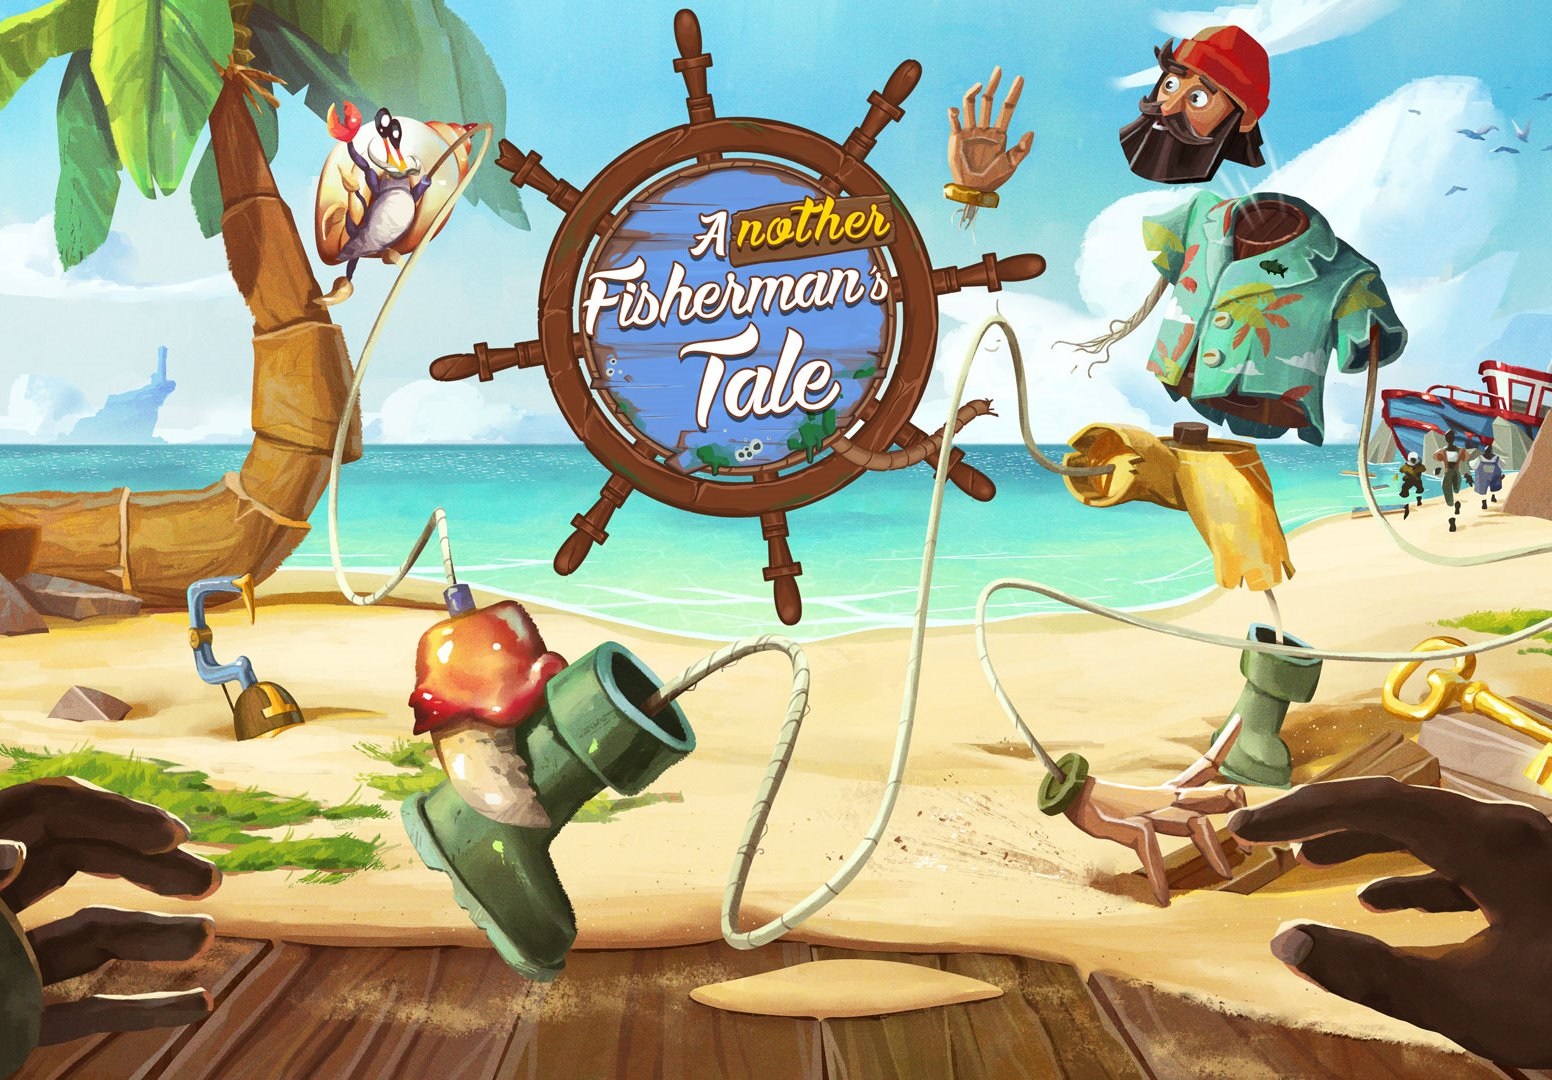 渔夫的故事续作《Another Fisherman's Tale》将于5月11日发售